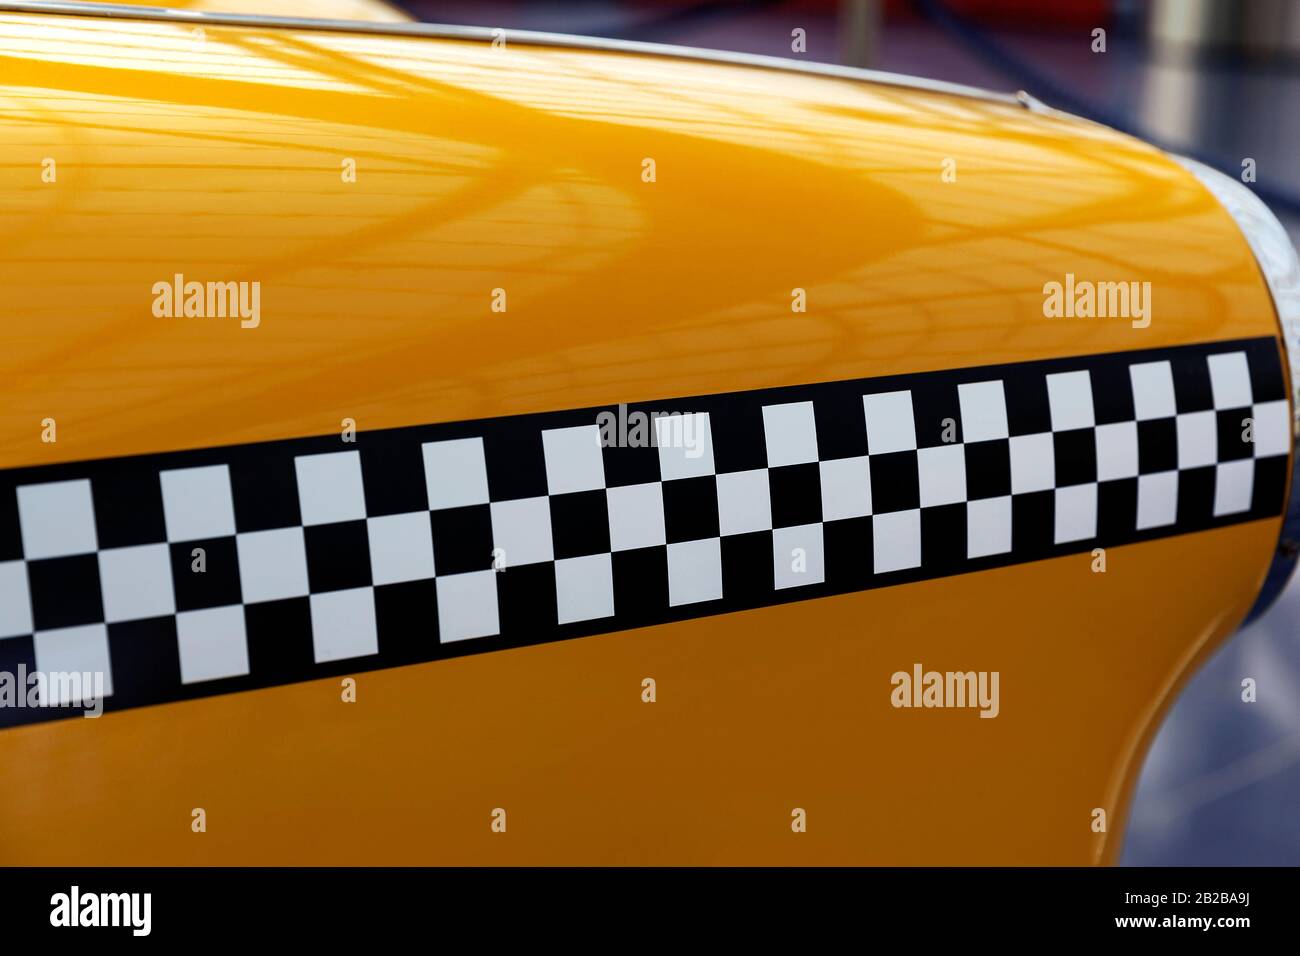 Schachermuster eines Retro-Taxi-Autos Stockfoto